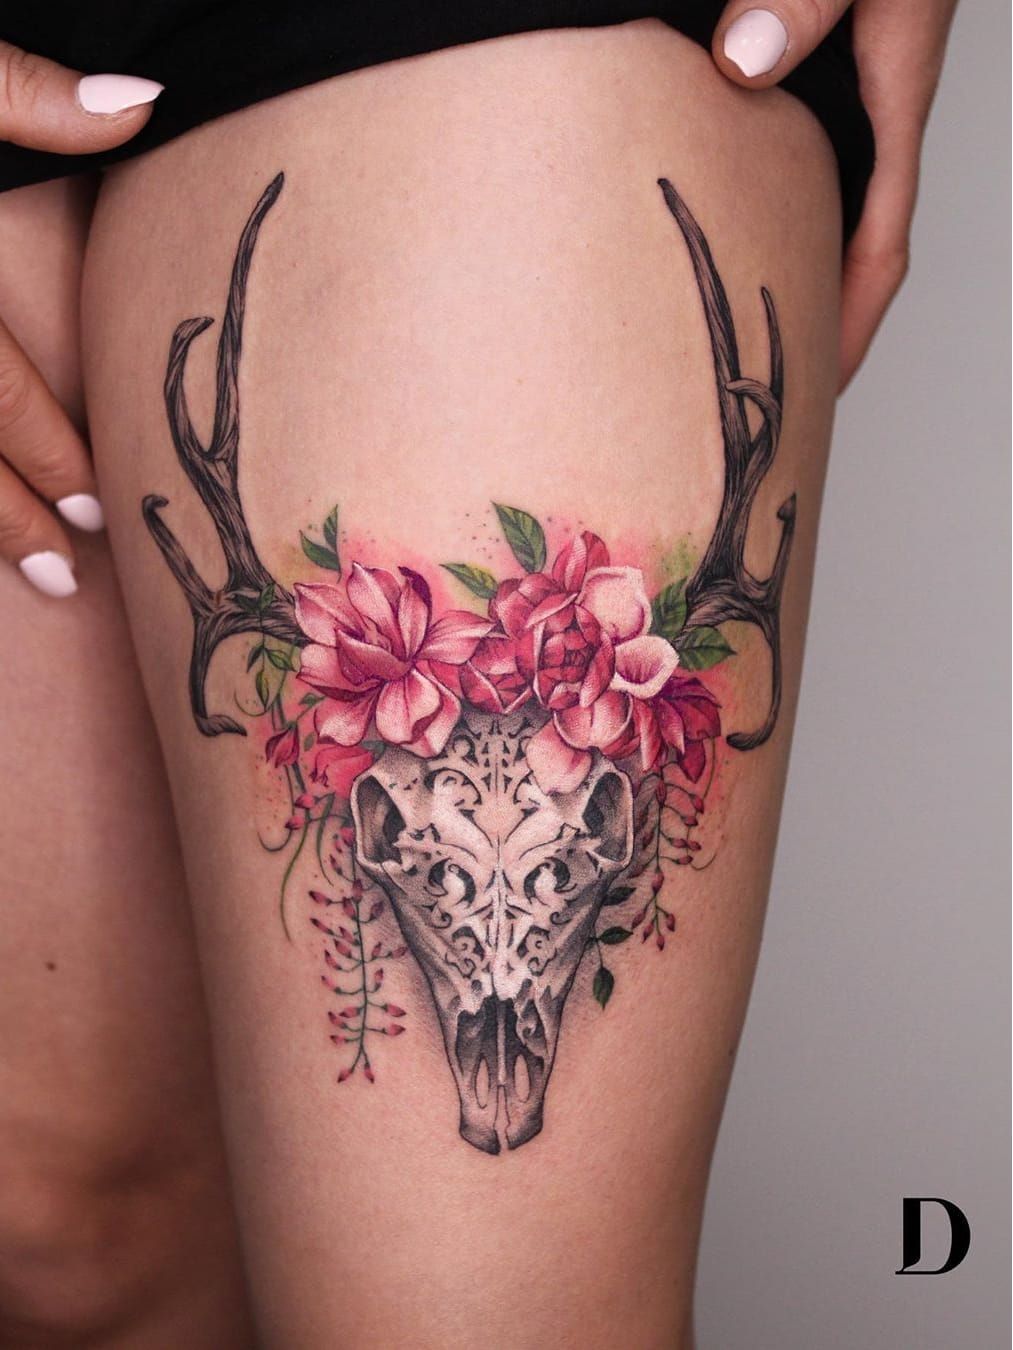 10 Deer Skull With Flowers Tattoo Designs  PetPress  Bull skull tattoos Floral  skull tattoos Deer tattoo designs